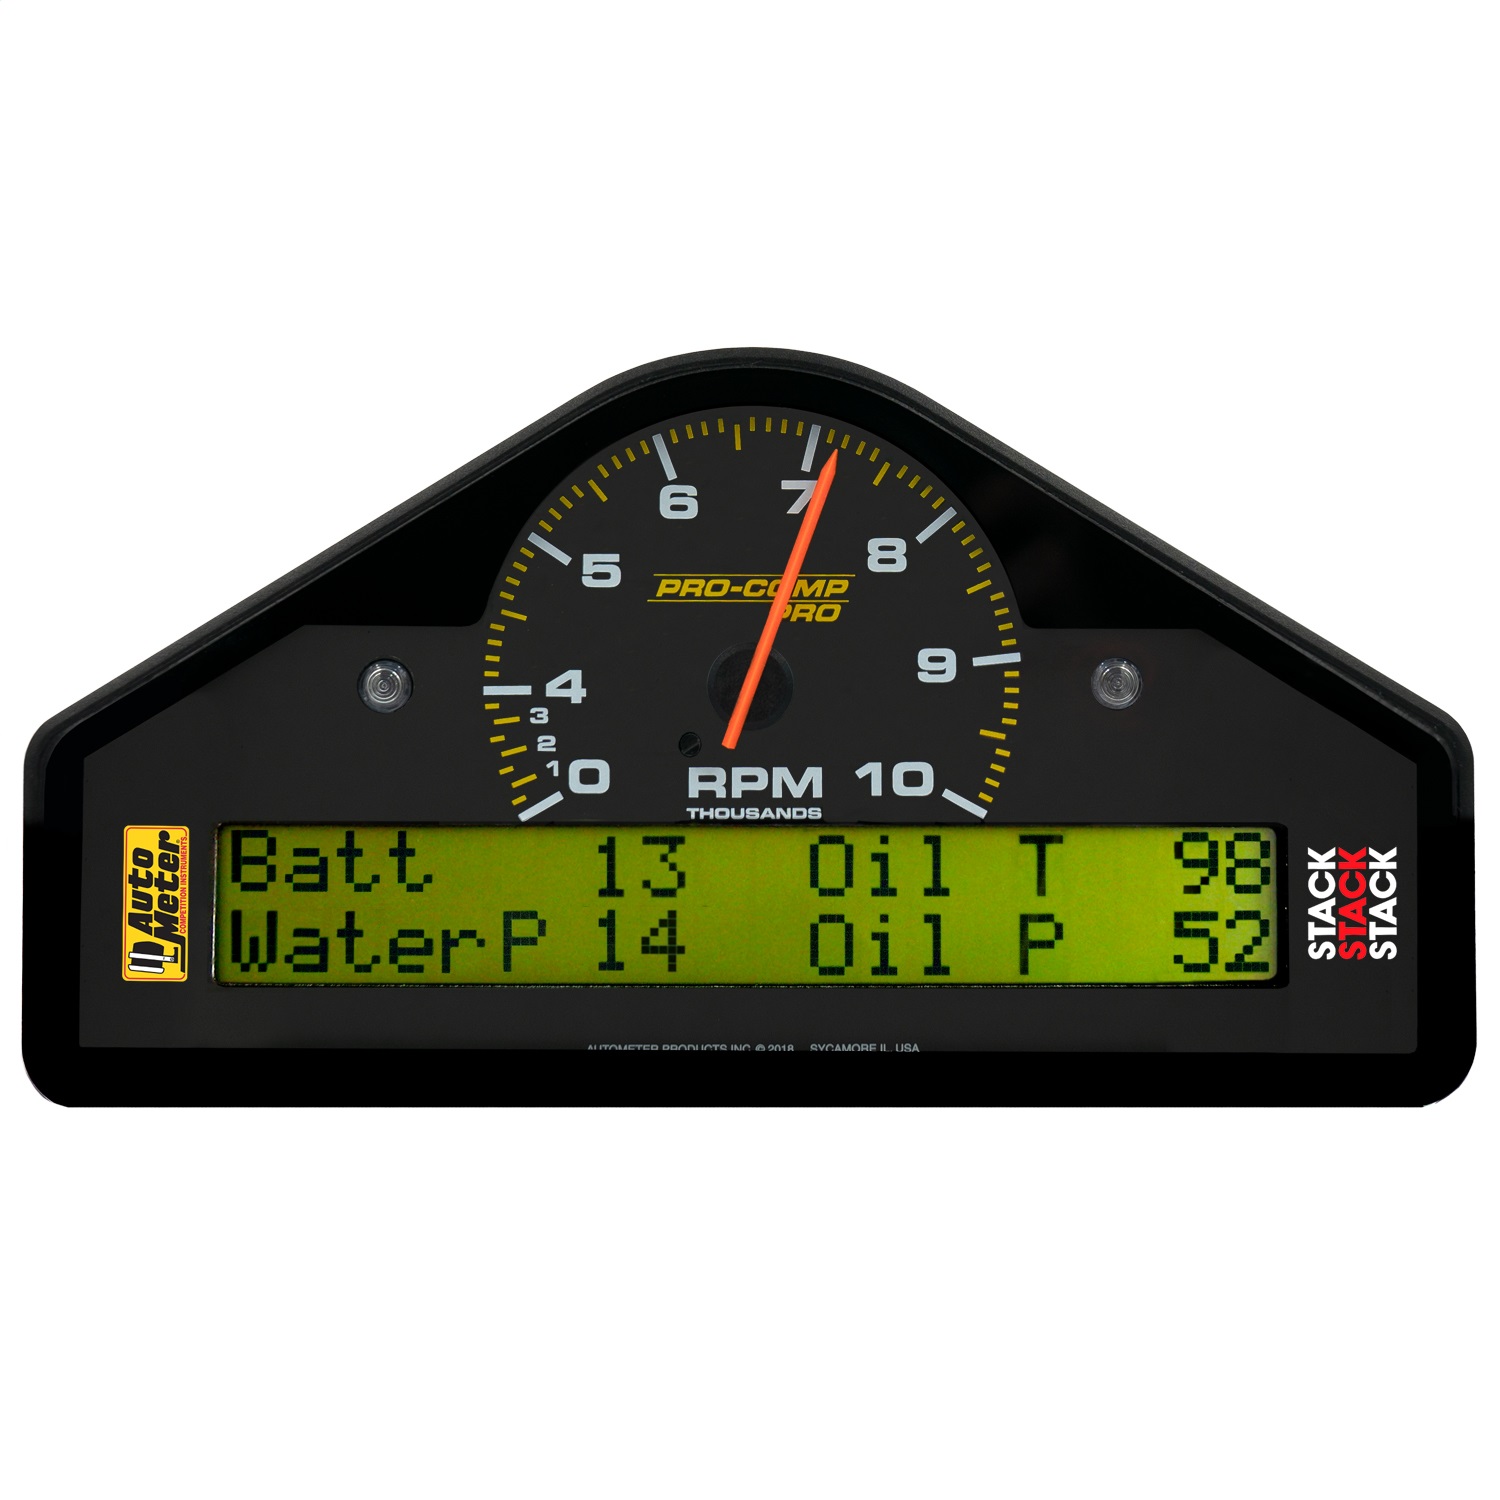 AutoMeter 6014 Pro-Comp Pro Digital Race Dash Display